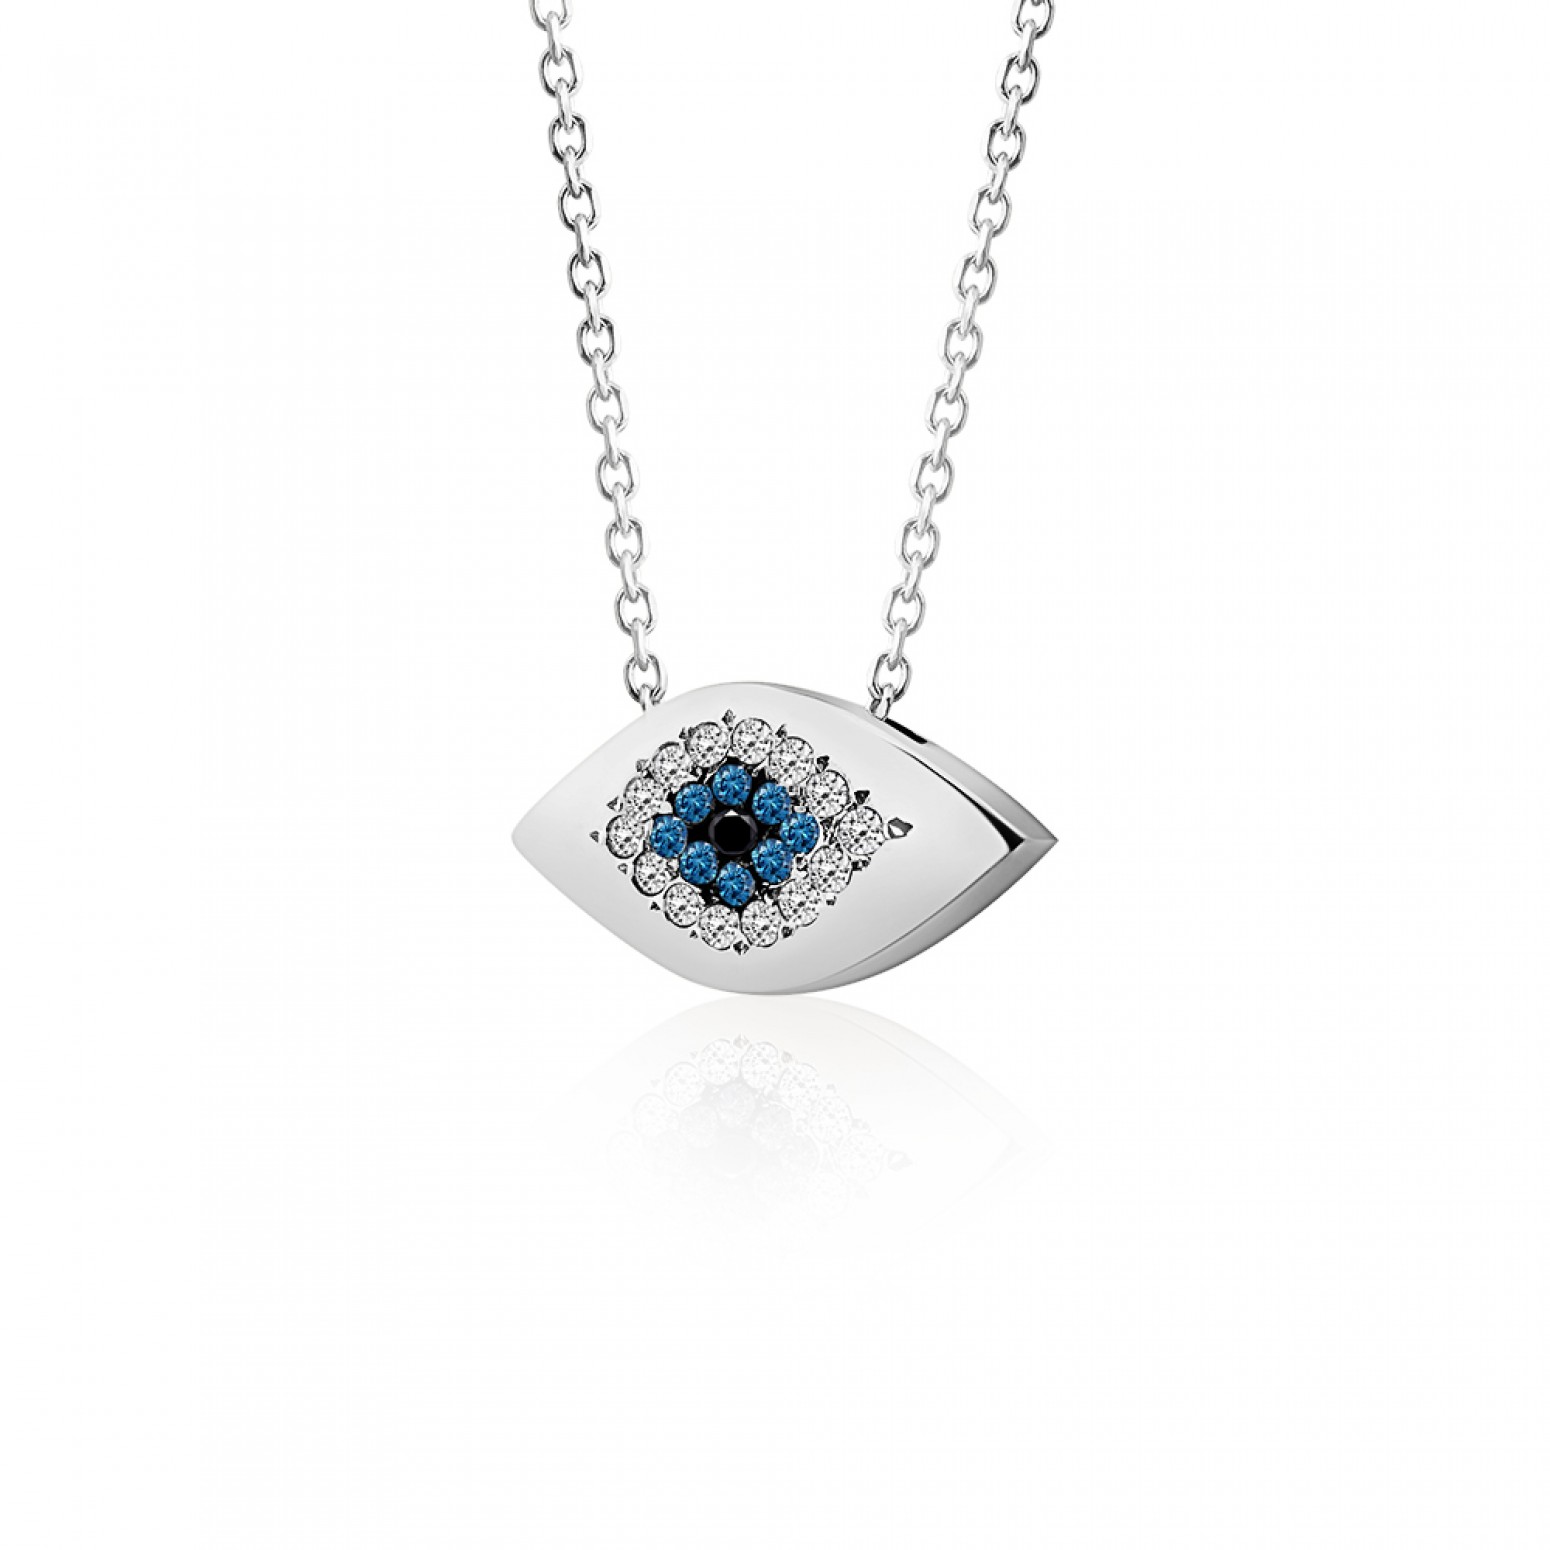 Eye necklace, Κ14  white gold with white, blue and black zircon, ko5494 NECKLACES Κοσμηματα - chrilia.gr